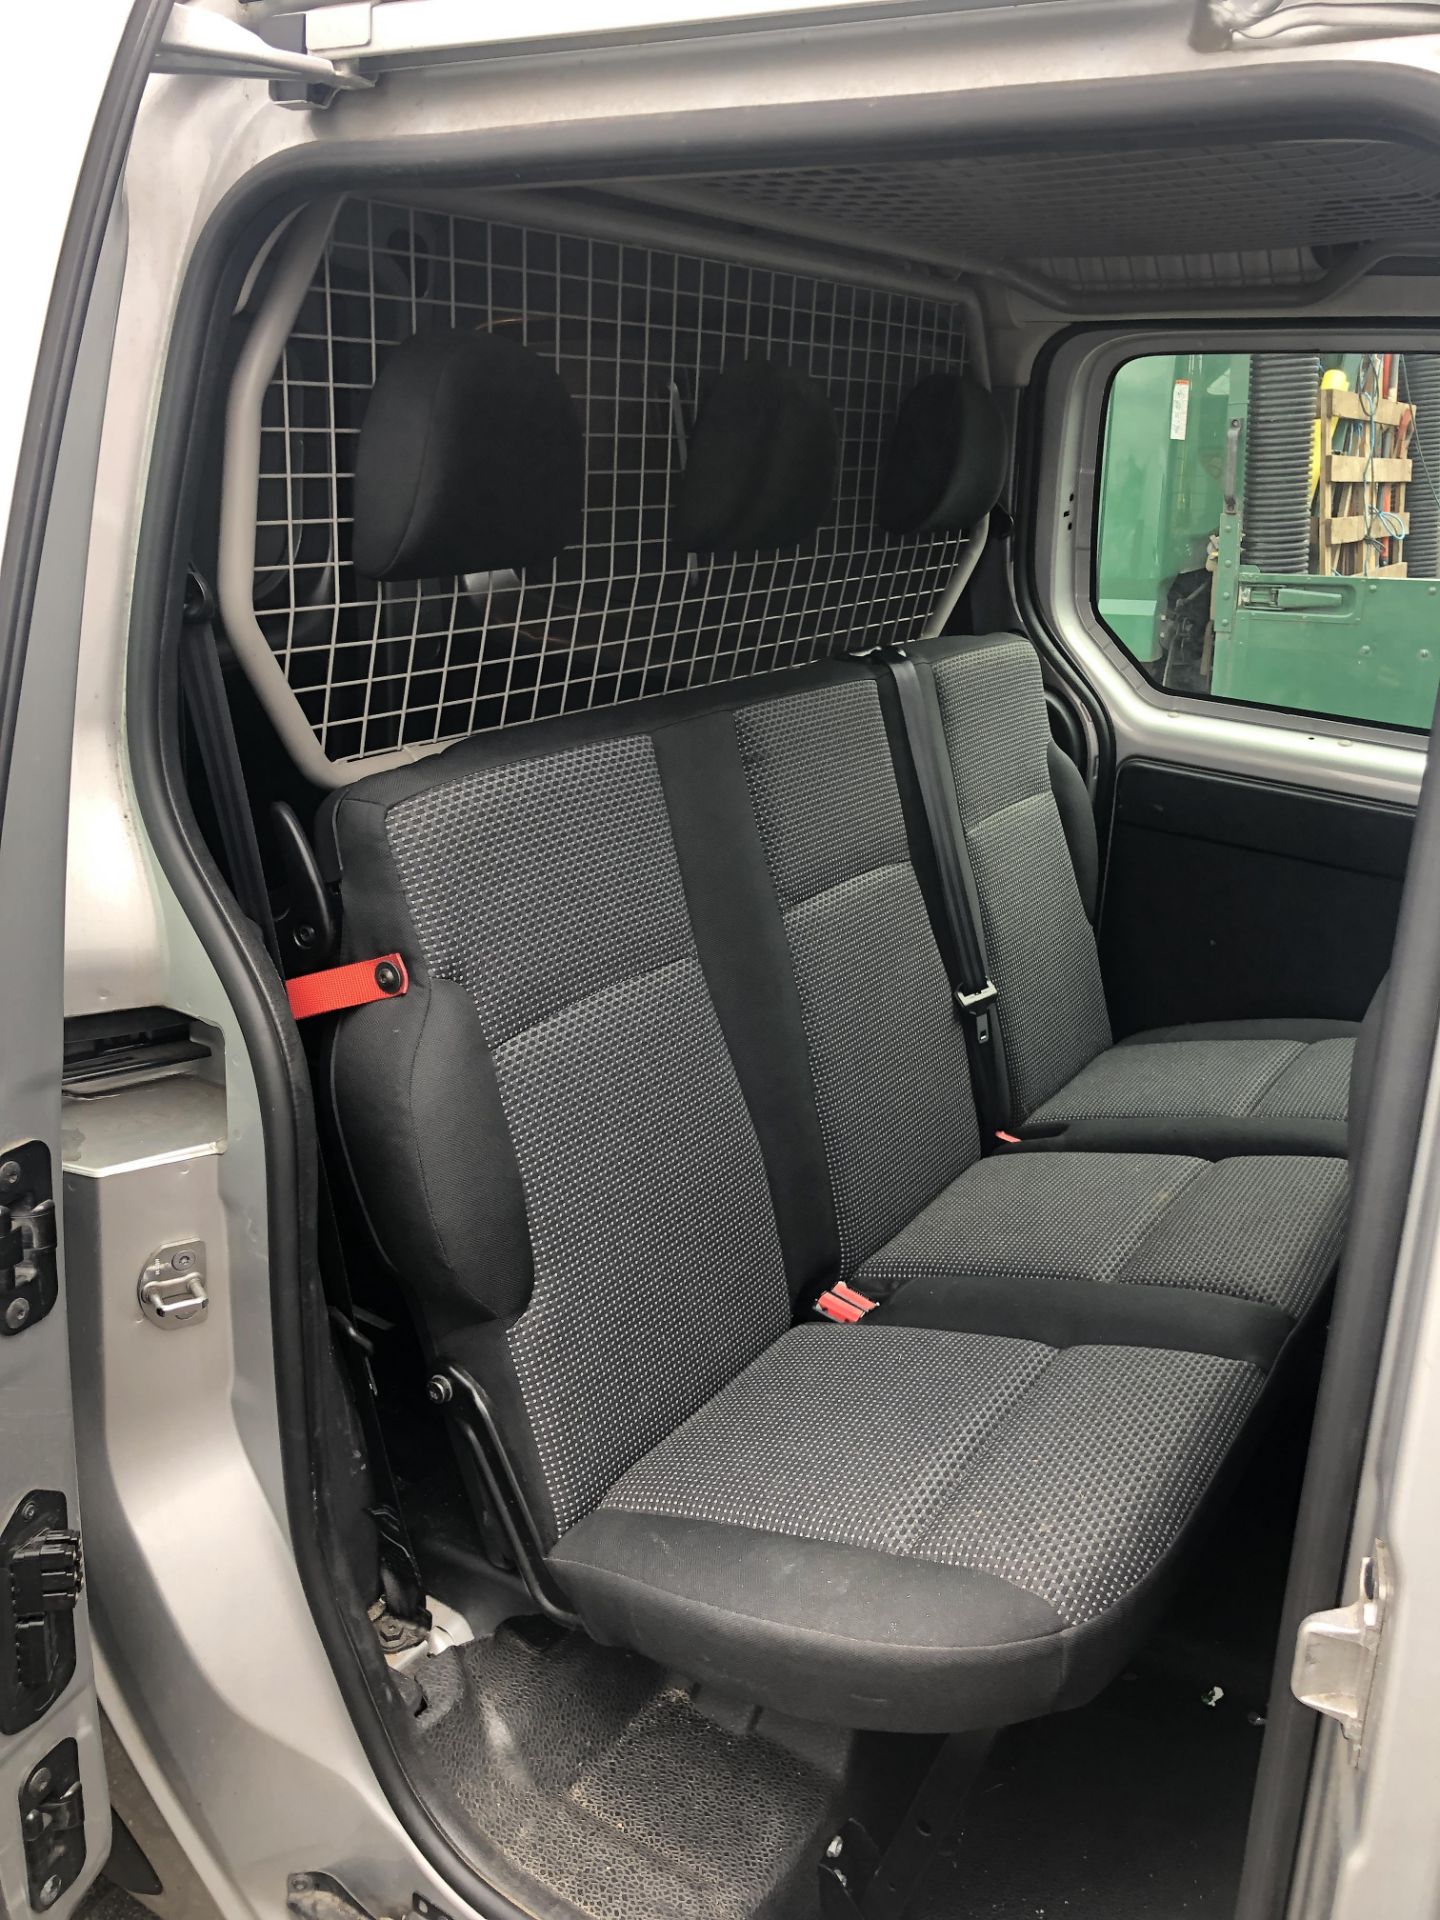 Mercedes Citan 111 CDI 1461cc 5 Speed Manual Dualiner Panel Van with Windows, Registration No. - Image 31 of 32